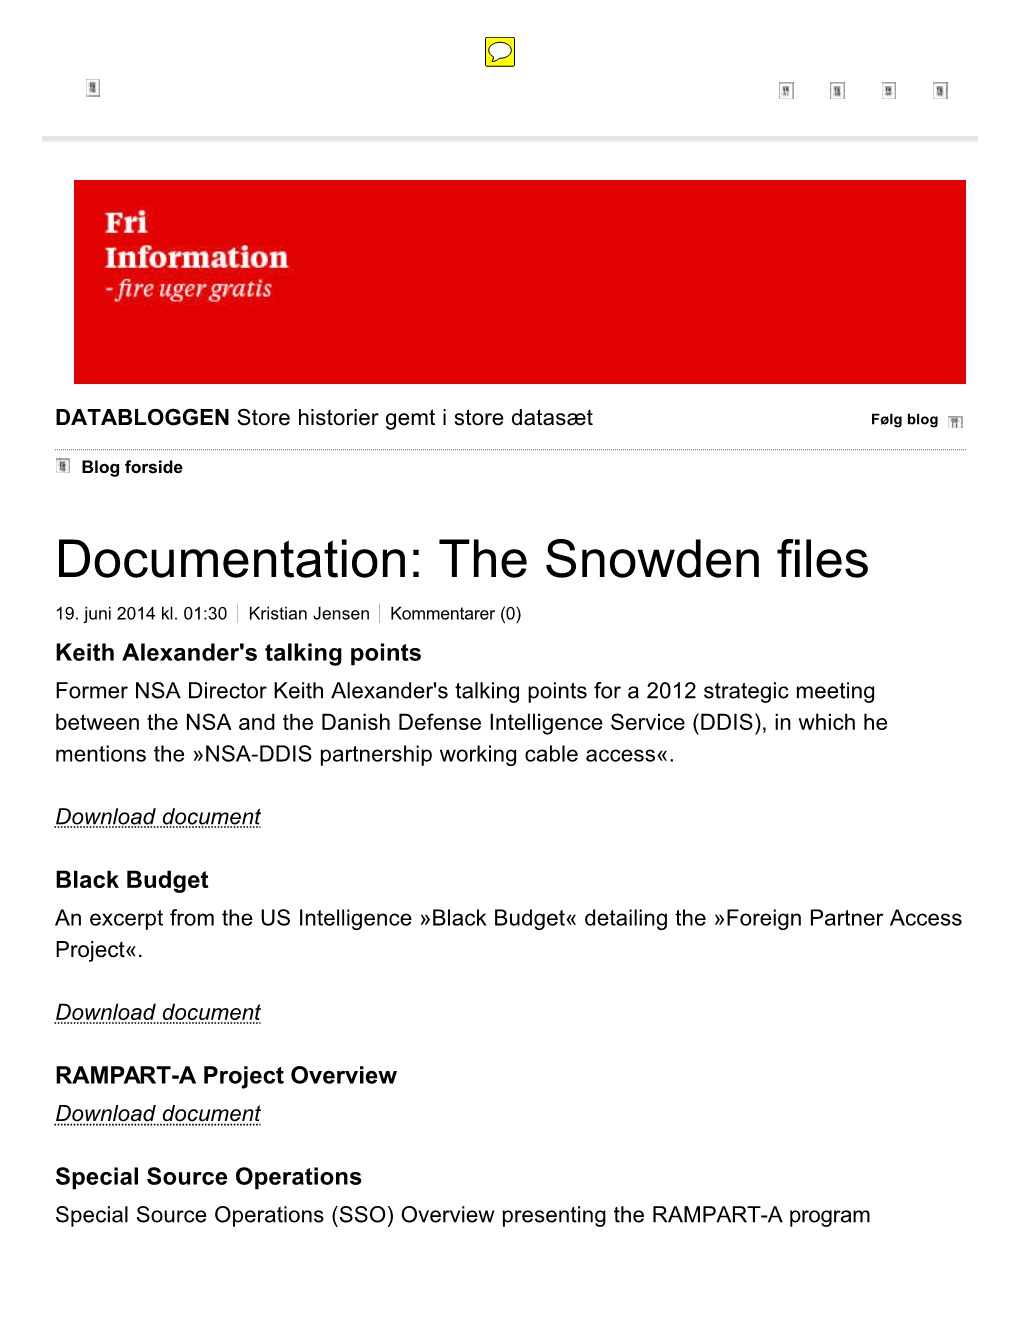 Documentation: the Snowden Files 19